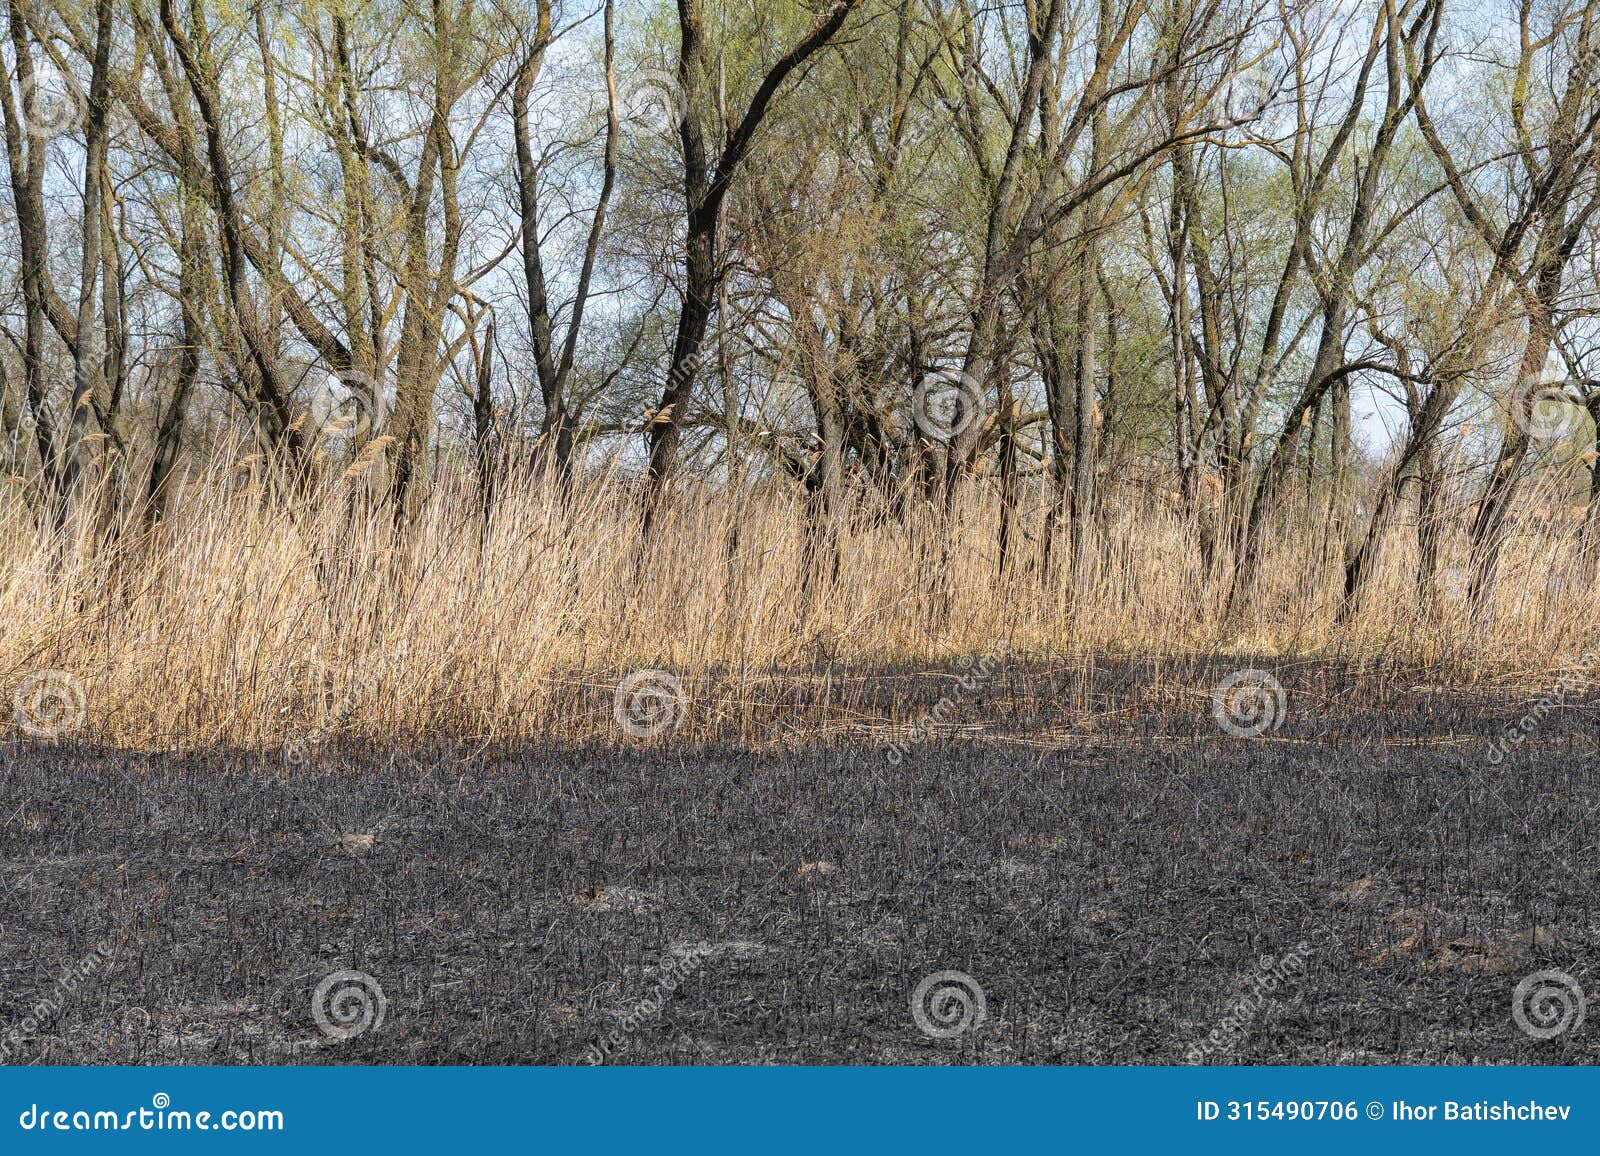 dry stem reeds sway on river bank on burnt ground.